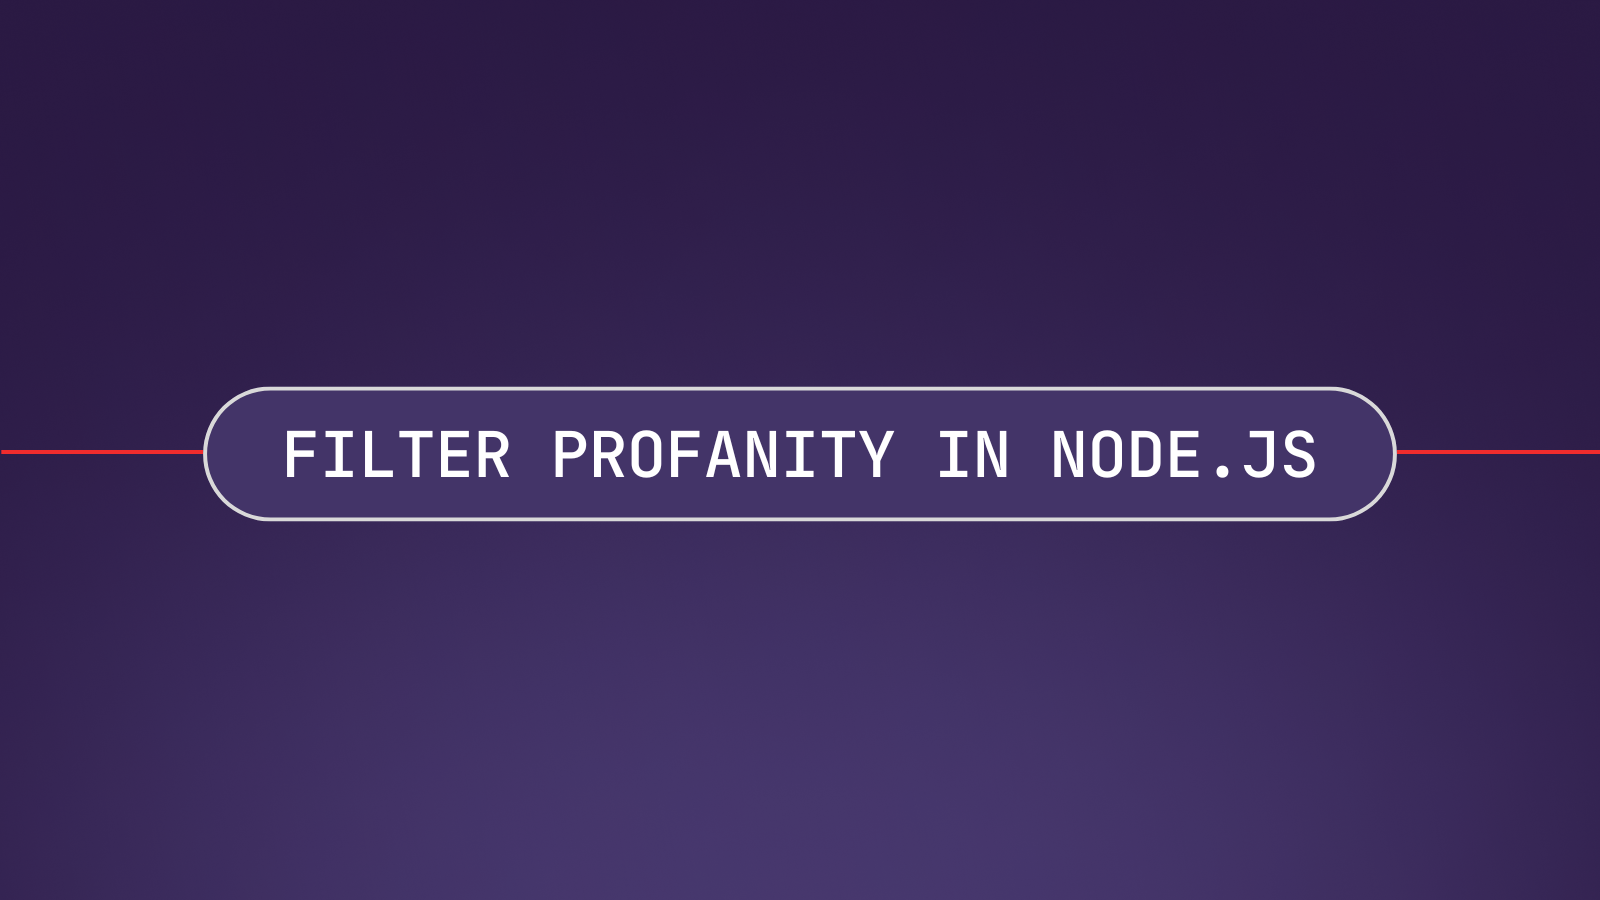 Filter profanity in Node.js